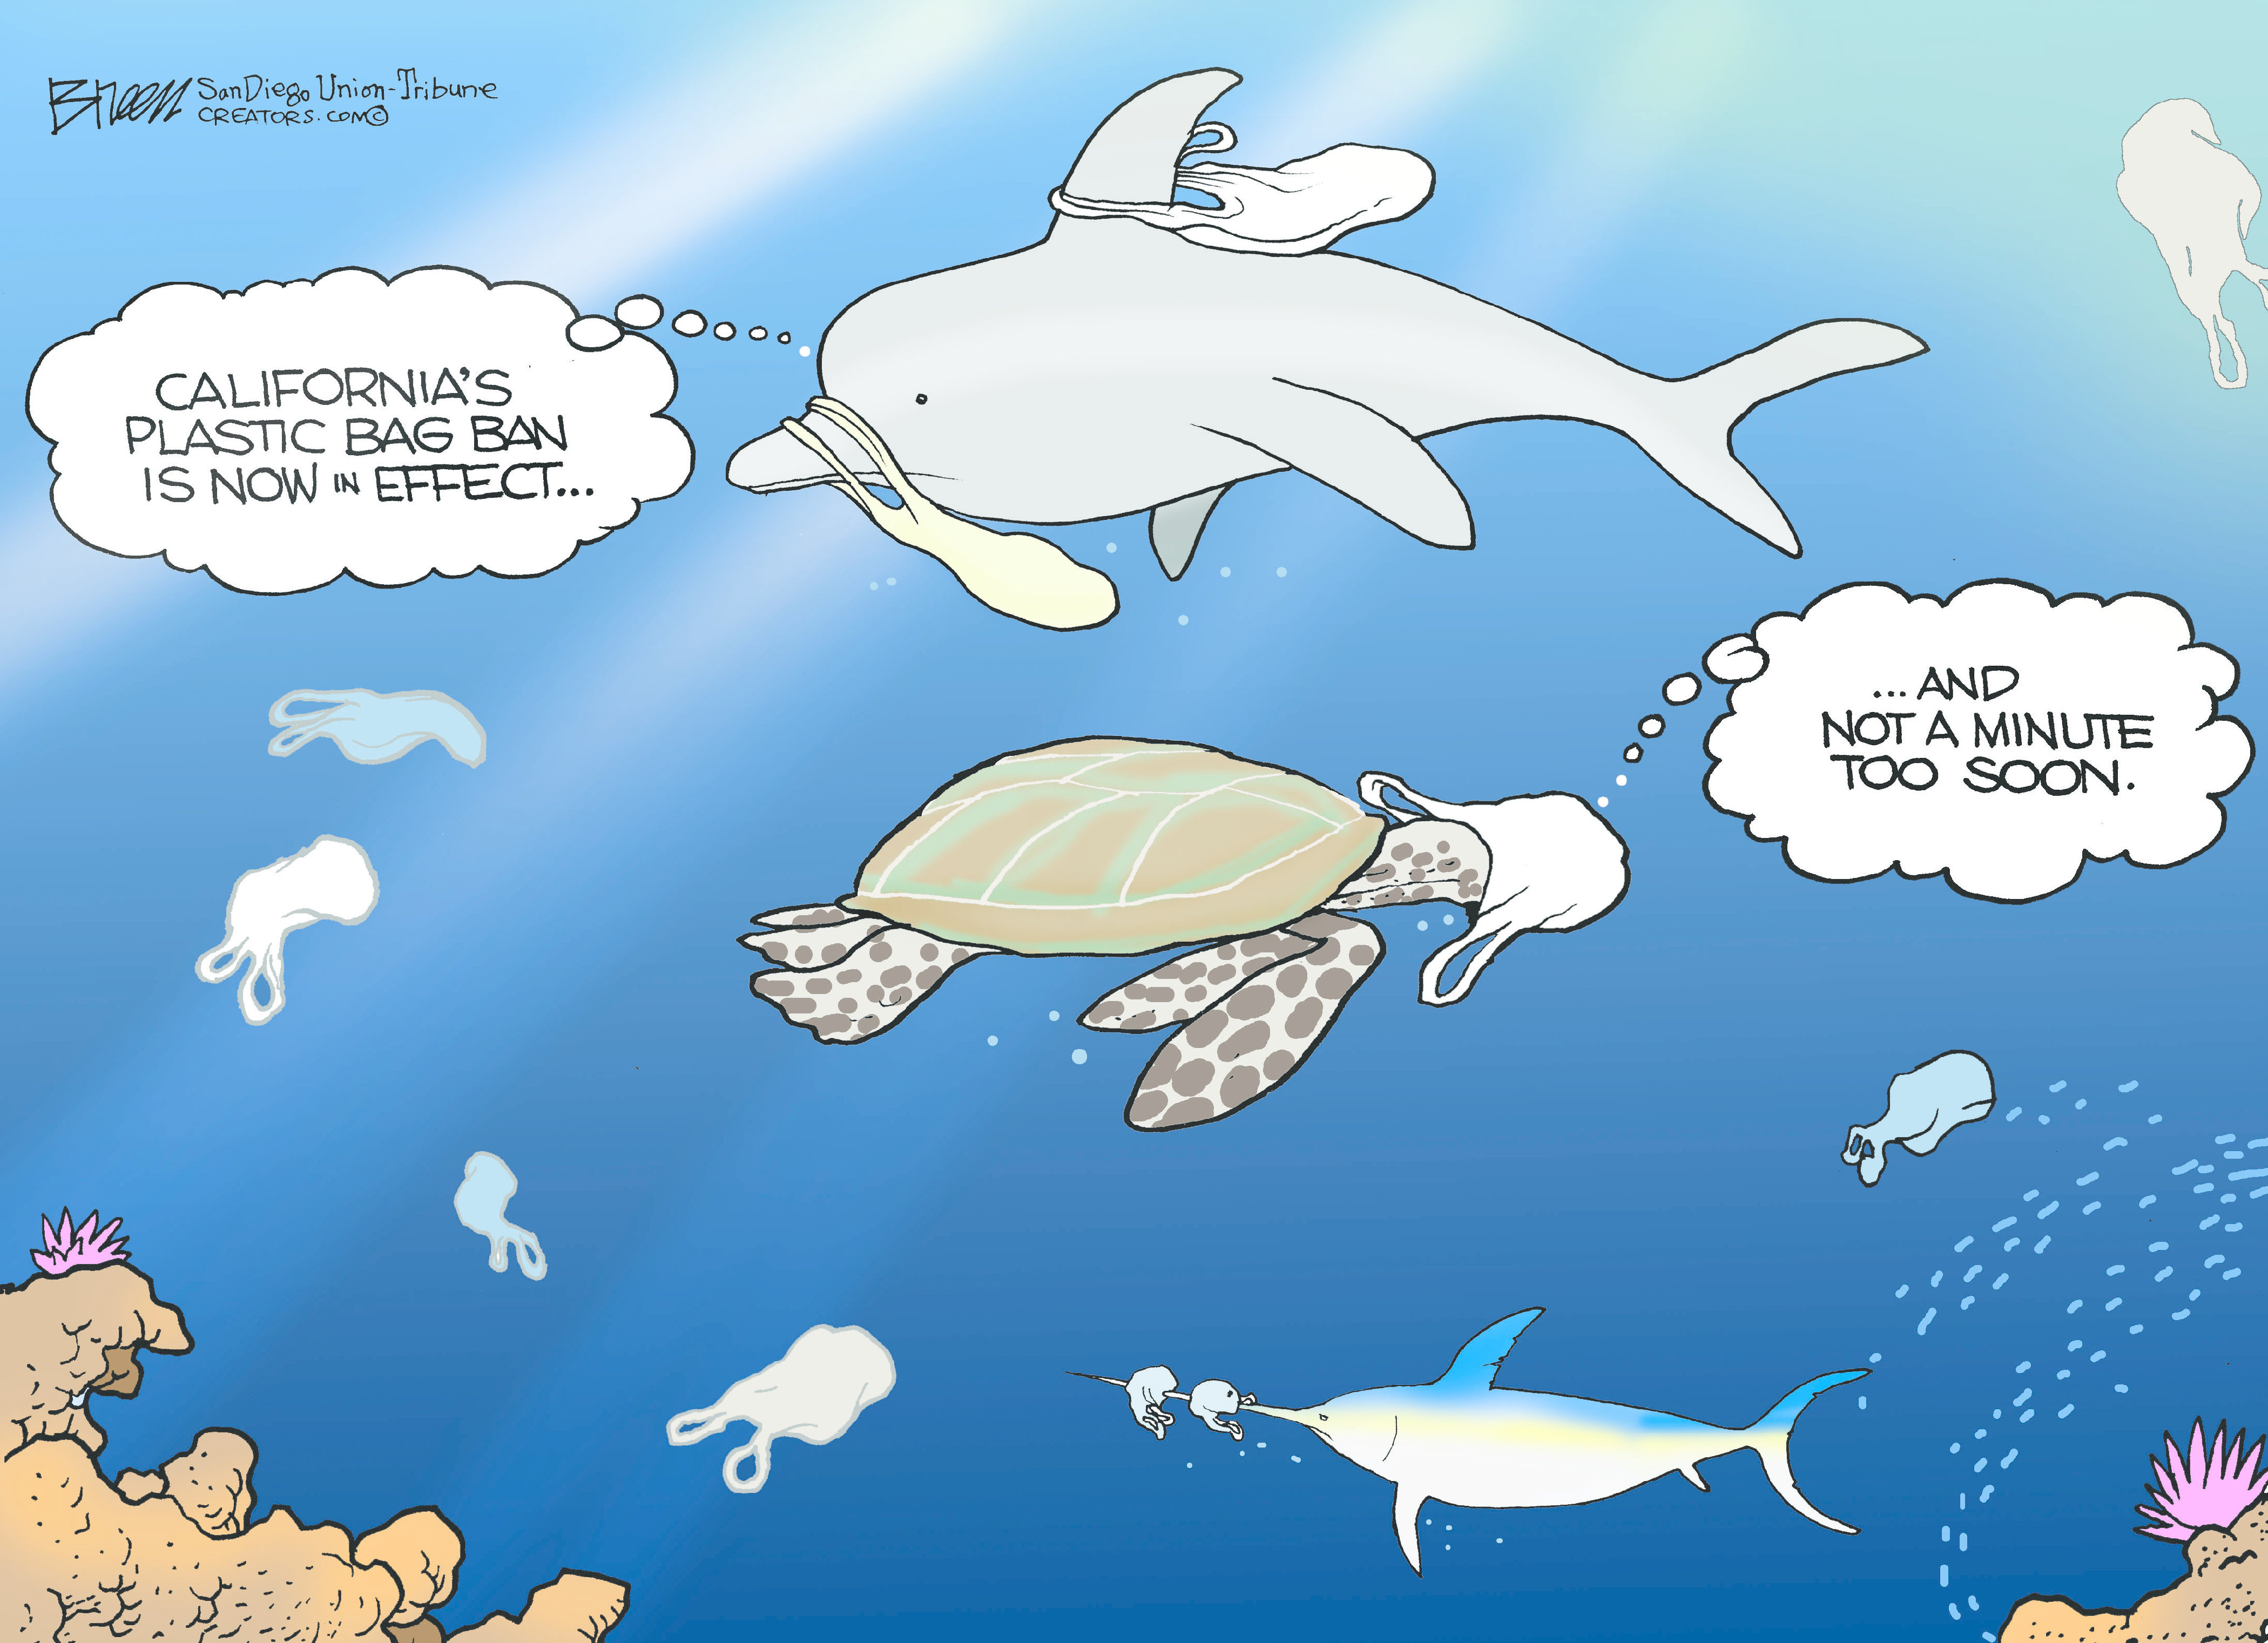 Editorial cartoon . California plastic bag ban